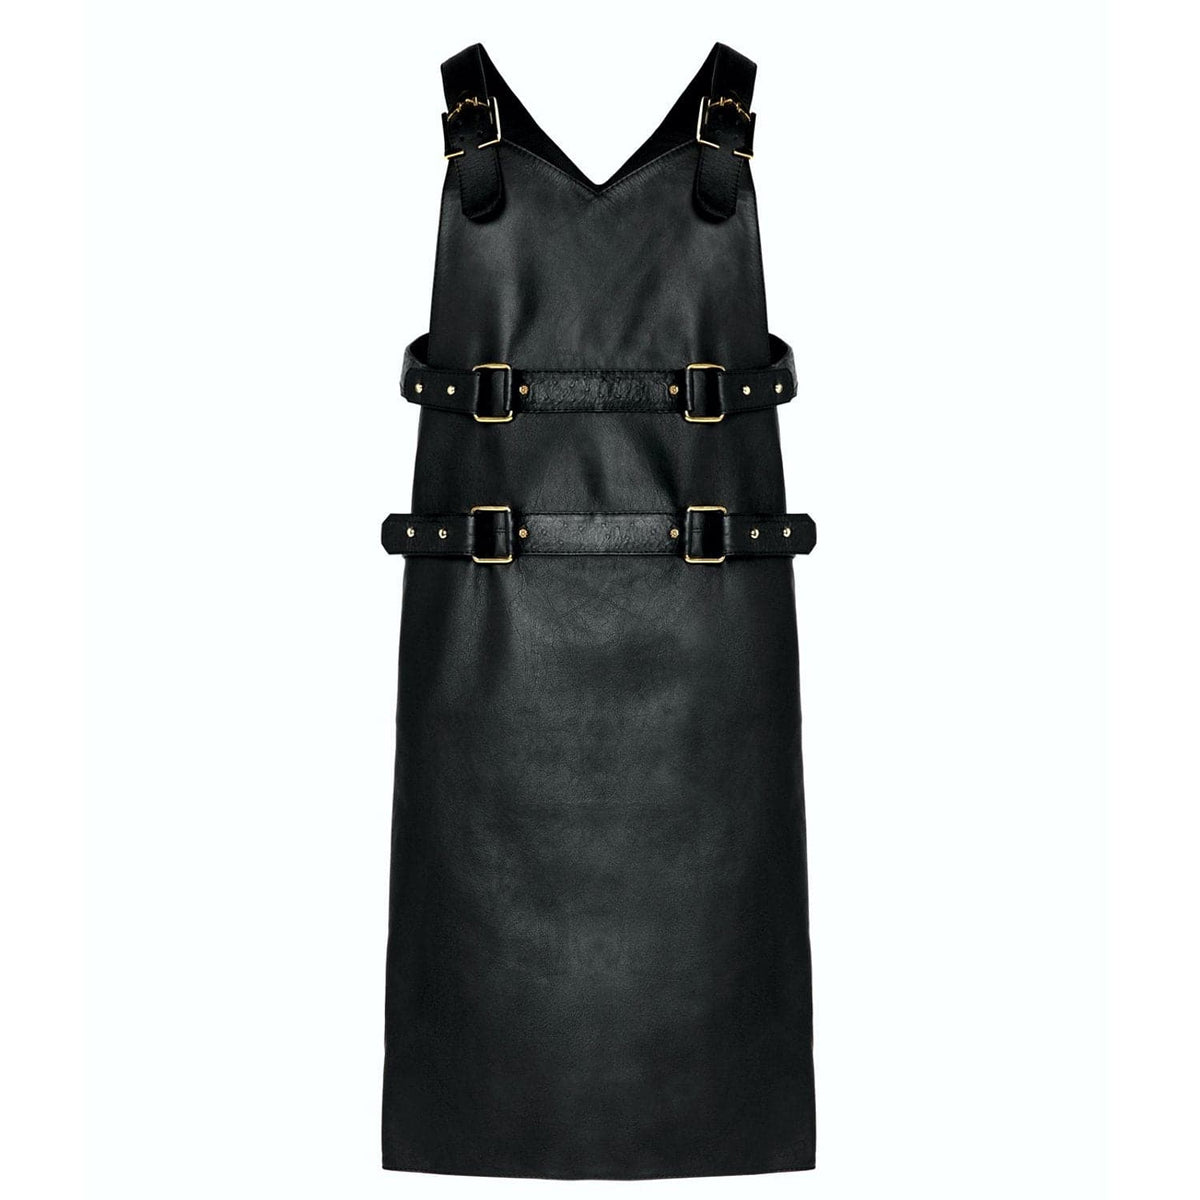 Eskandur men&#39;s black leather luxury premium apron ghost mannequin front view